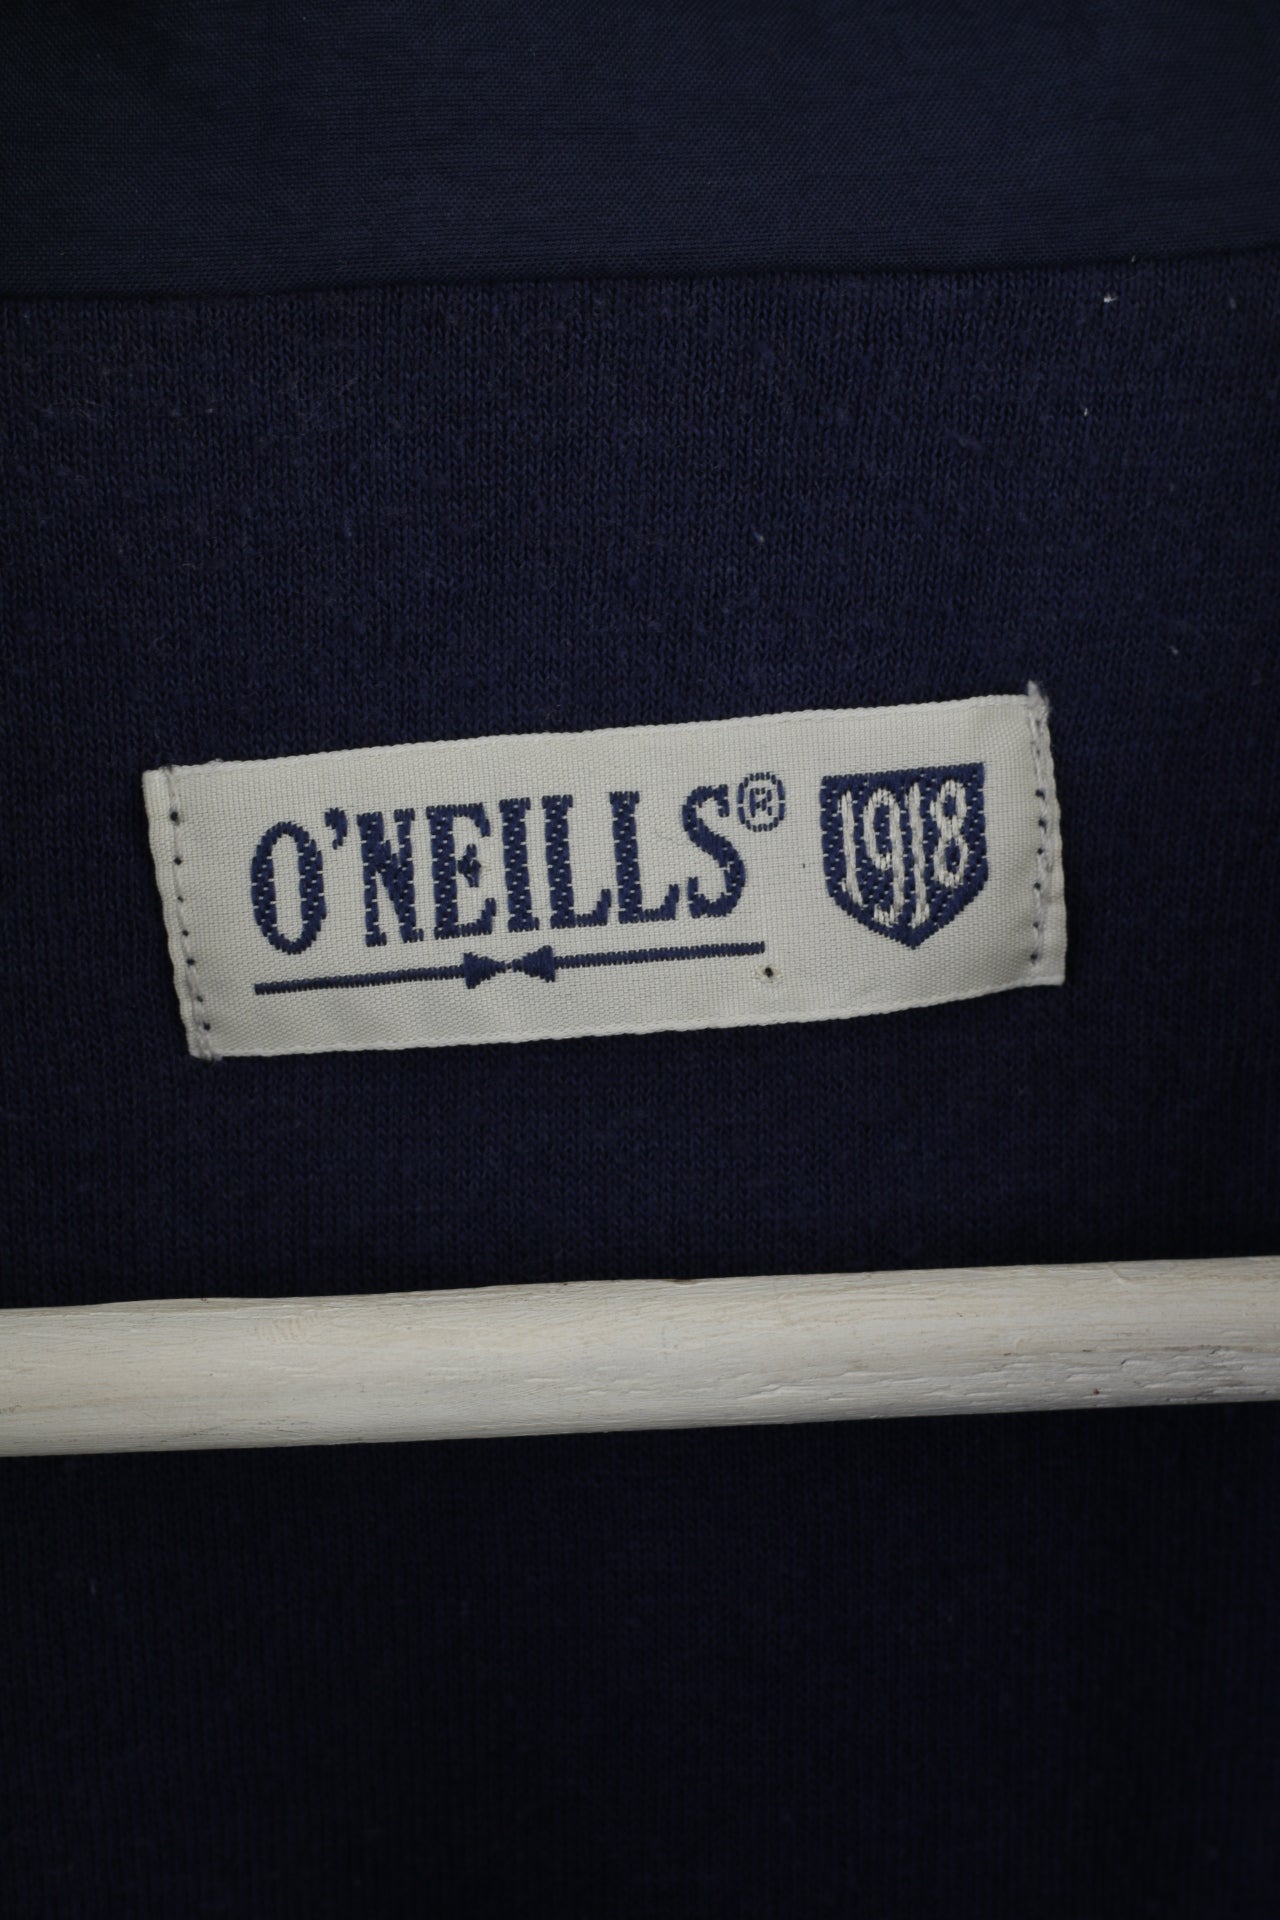 O'Neills Boys 13 / 14 Age Track Top Jacket Blue Football Growth Of North Nylon Top